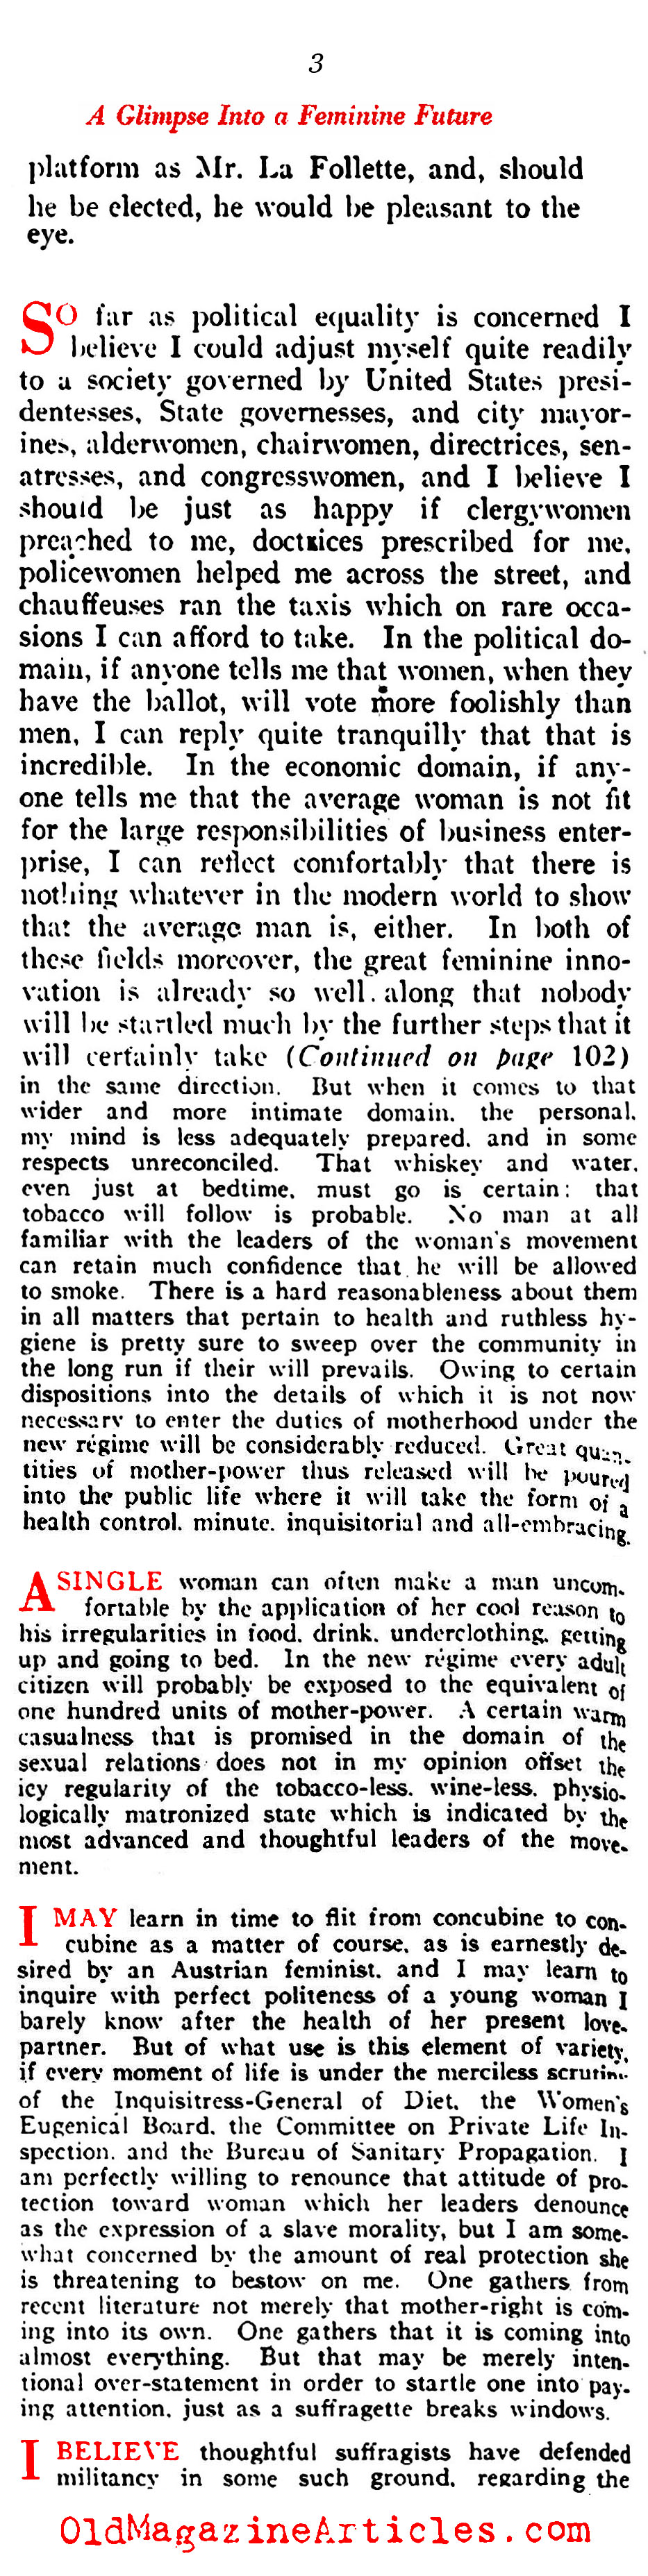 ''When Women Rule''(Vanity Fair, 1918)